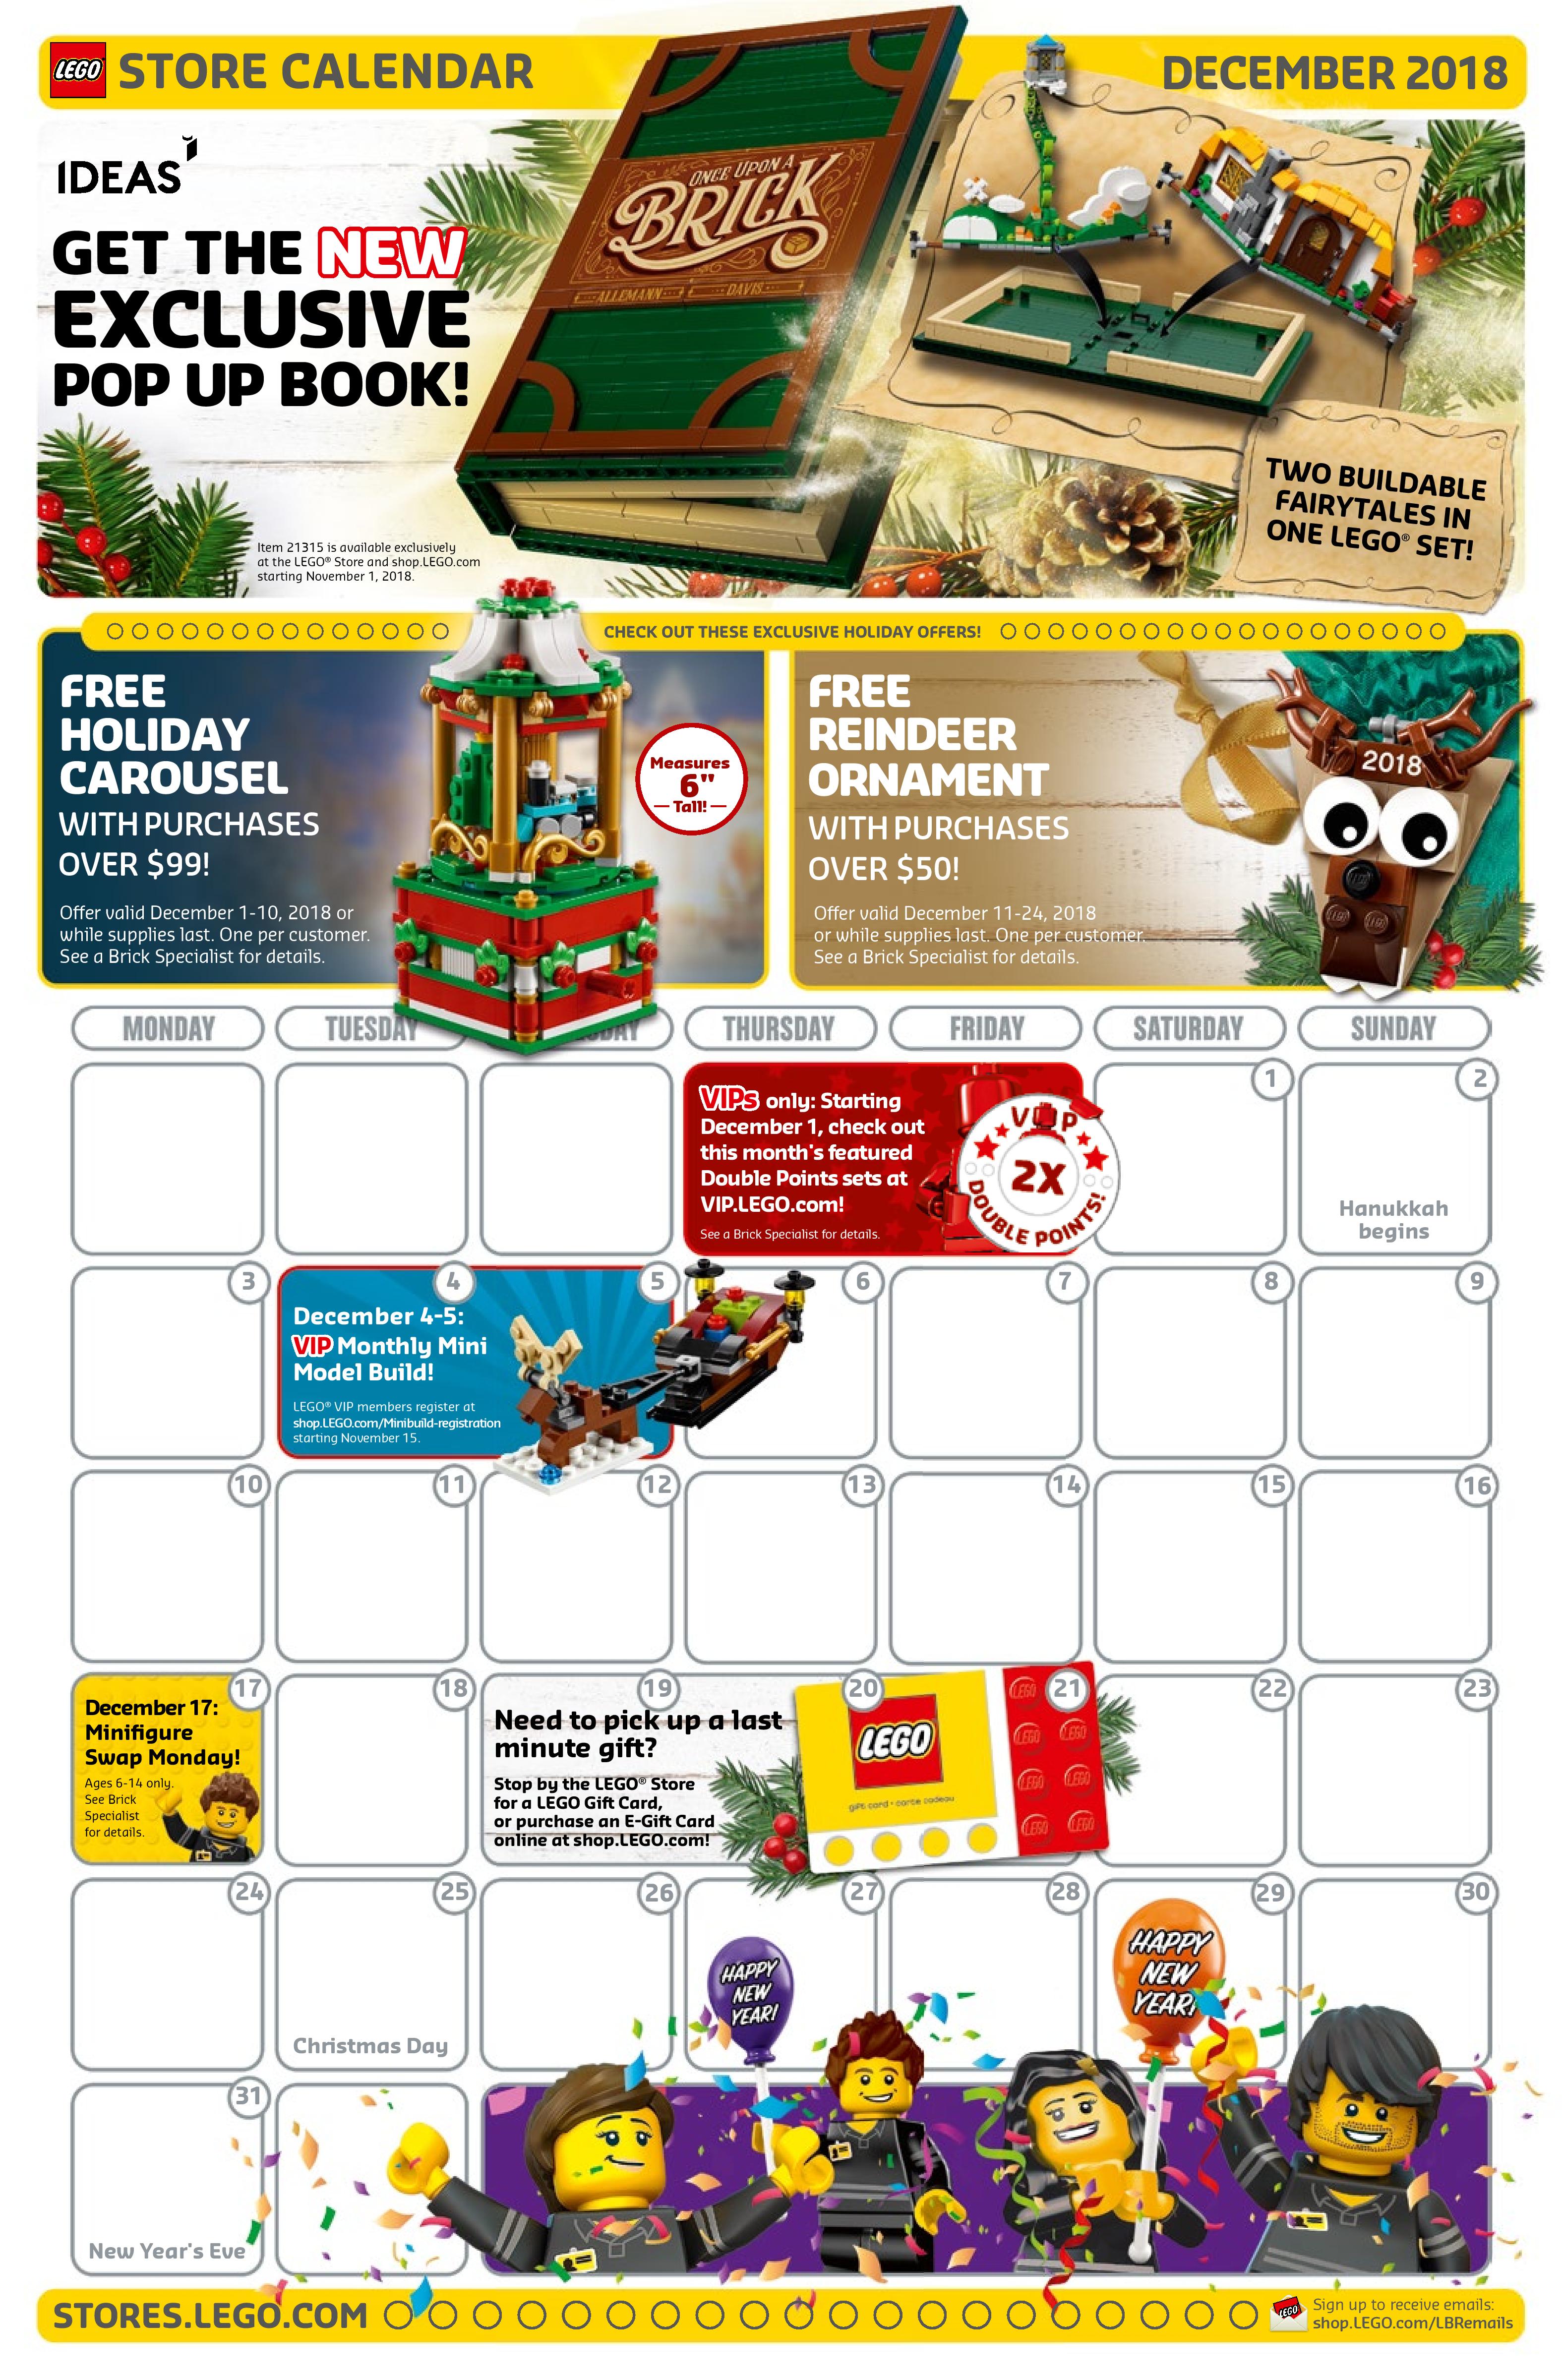 Lego Store Calendar March 2021 / Includes 2021 observances, fun facts